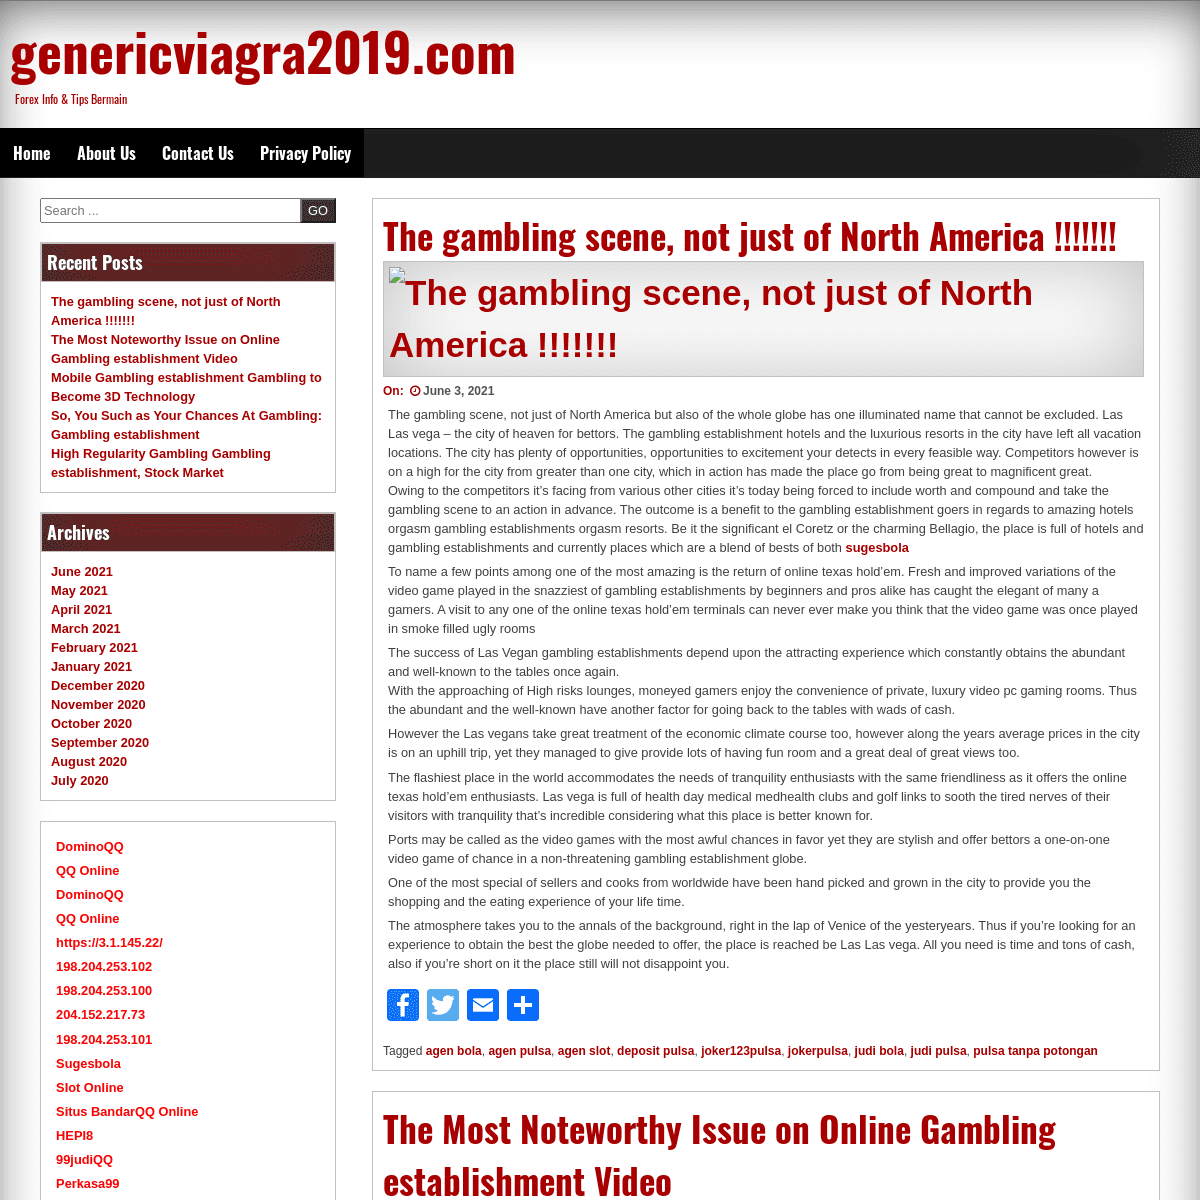 A complete backup of https://genericviagra2019.com